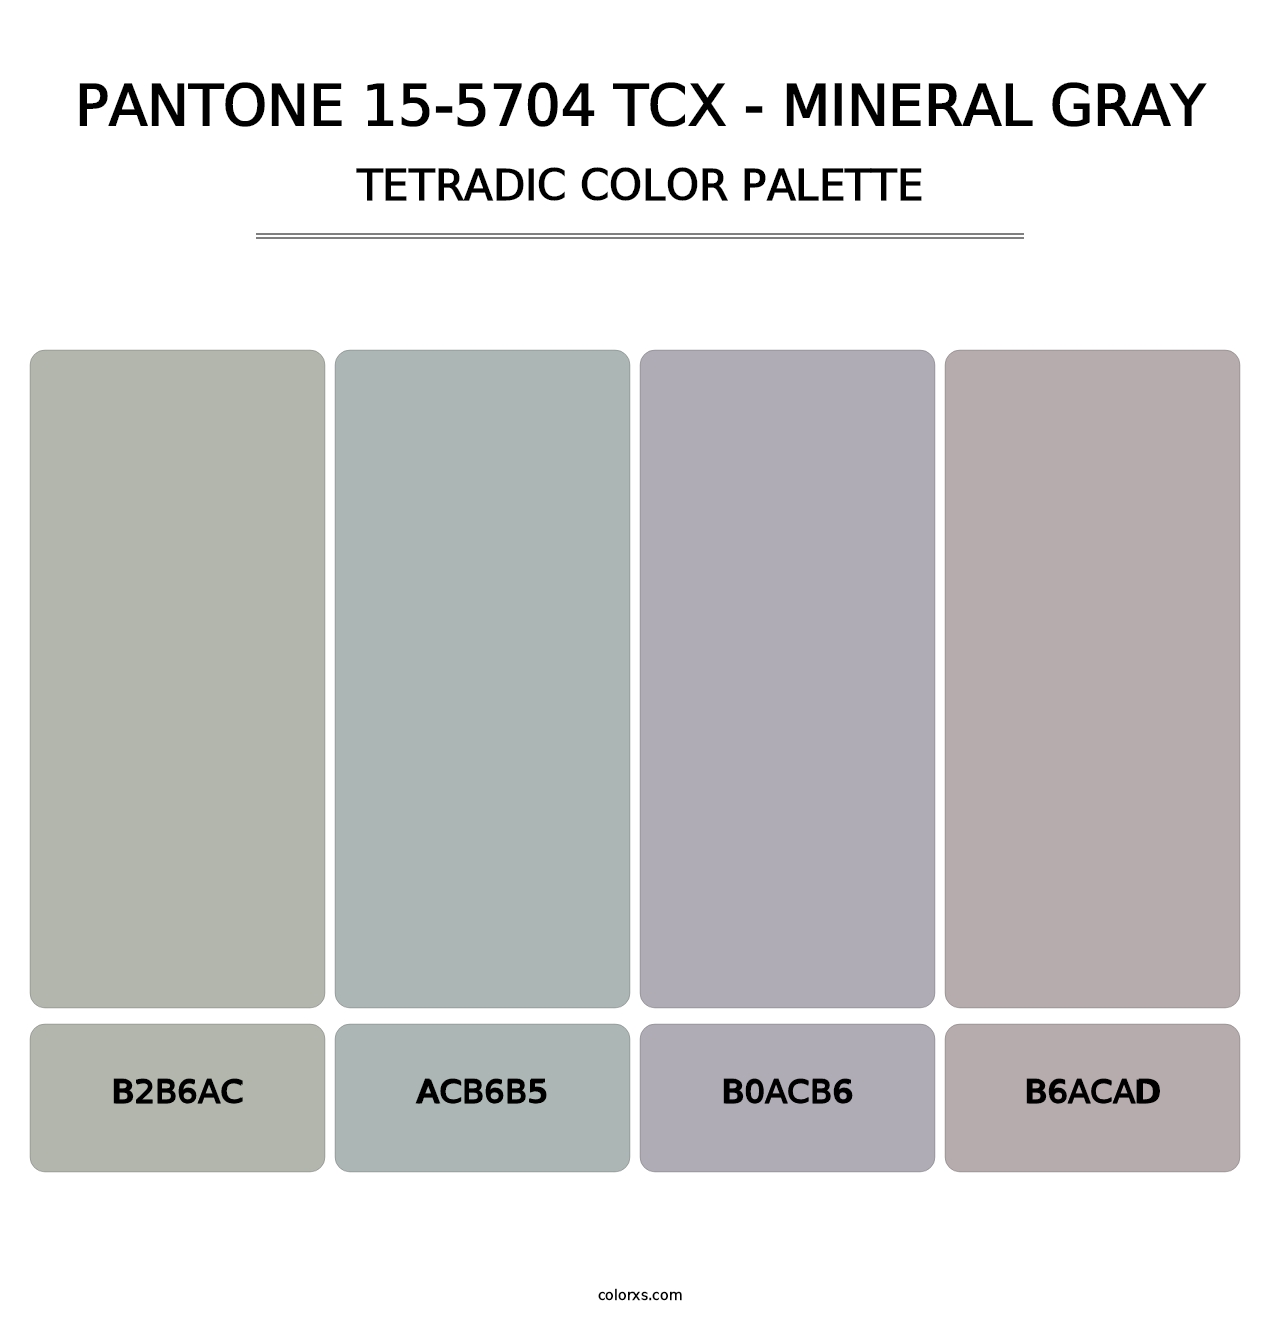 PANTONE 15-5704 TCX - Mineral Gray - Tetradic Color Palette